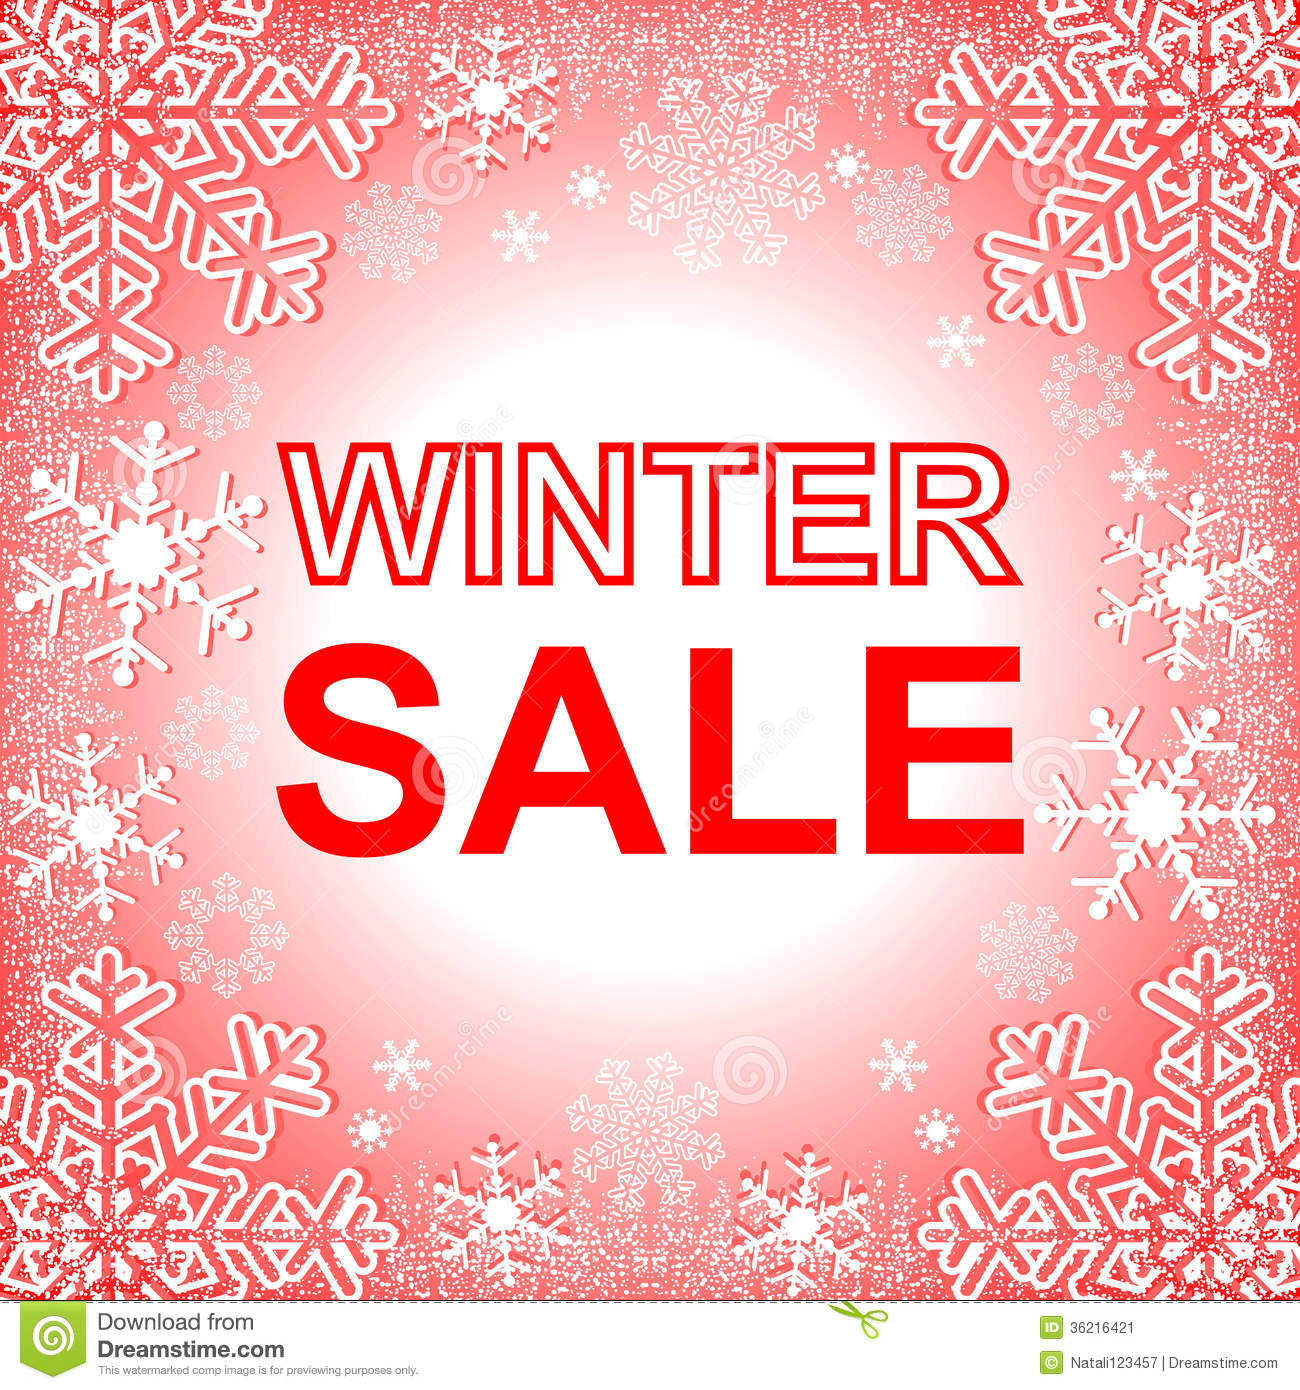 Winter Sale  Stock Image   Image  36216421